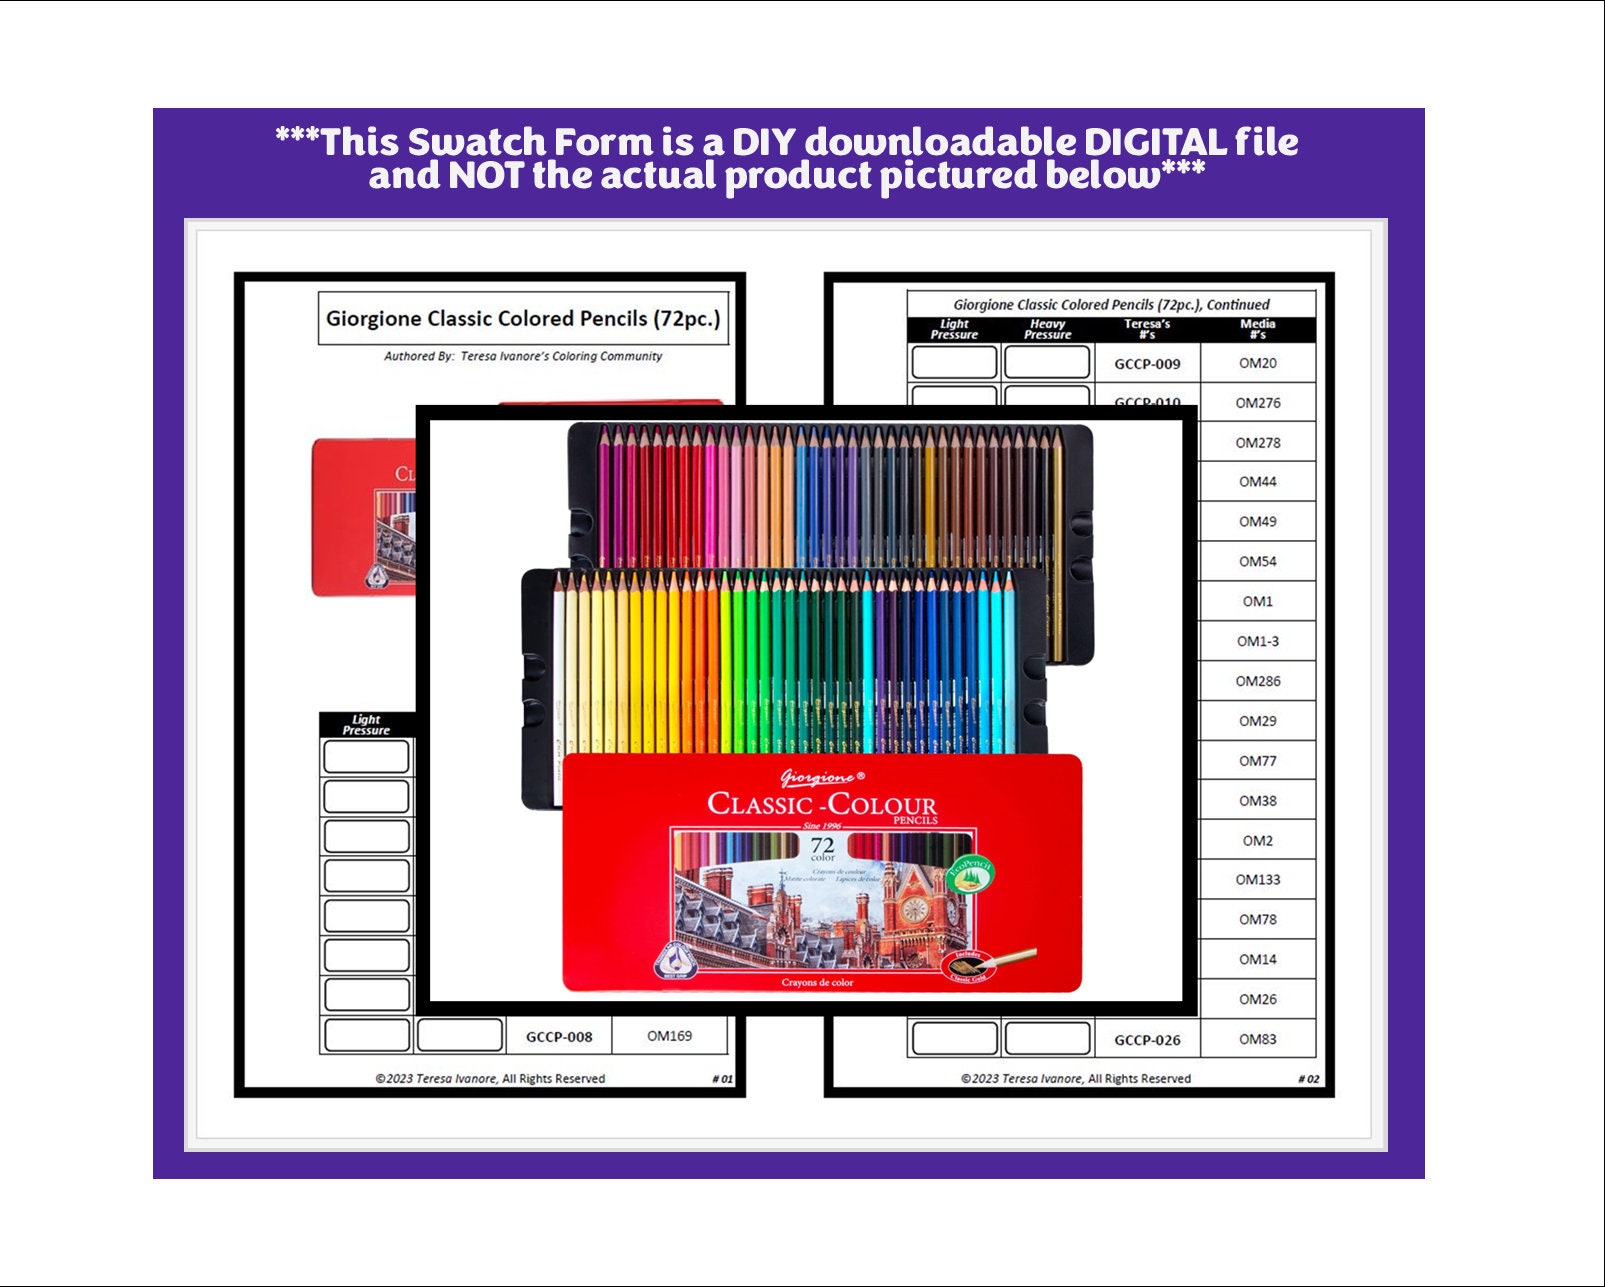 Swatch Form: POSCA Colored Pencils (36pc.)